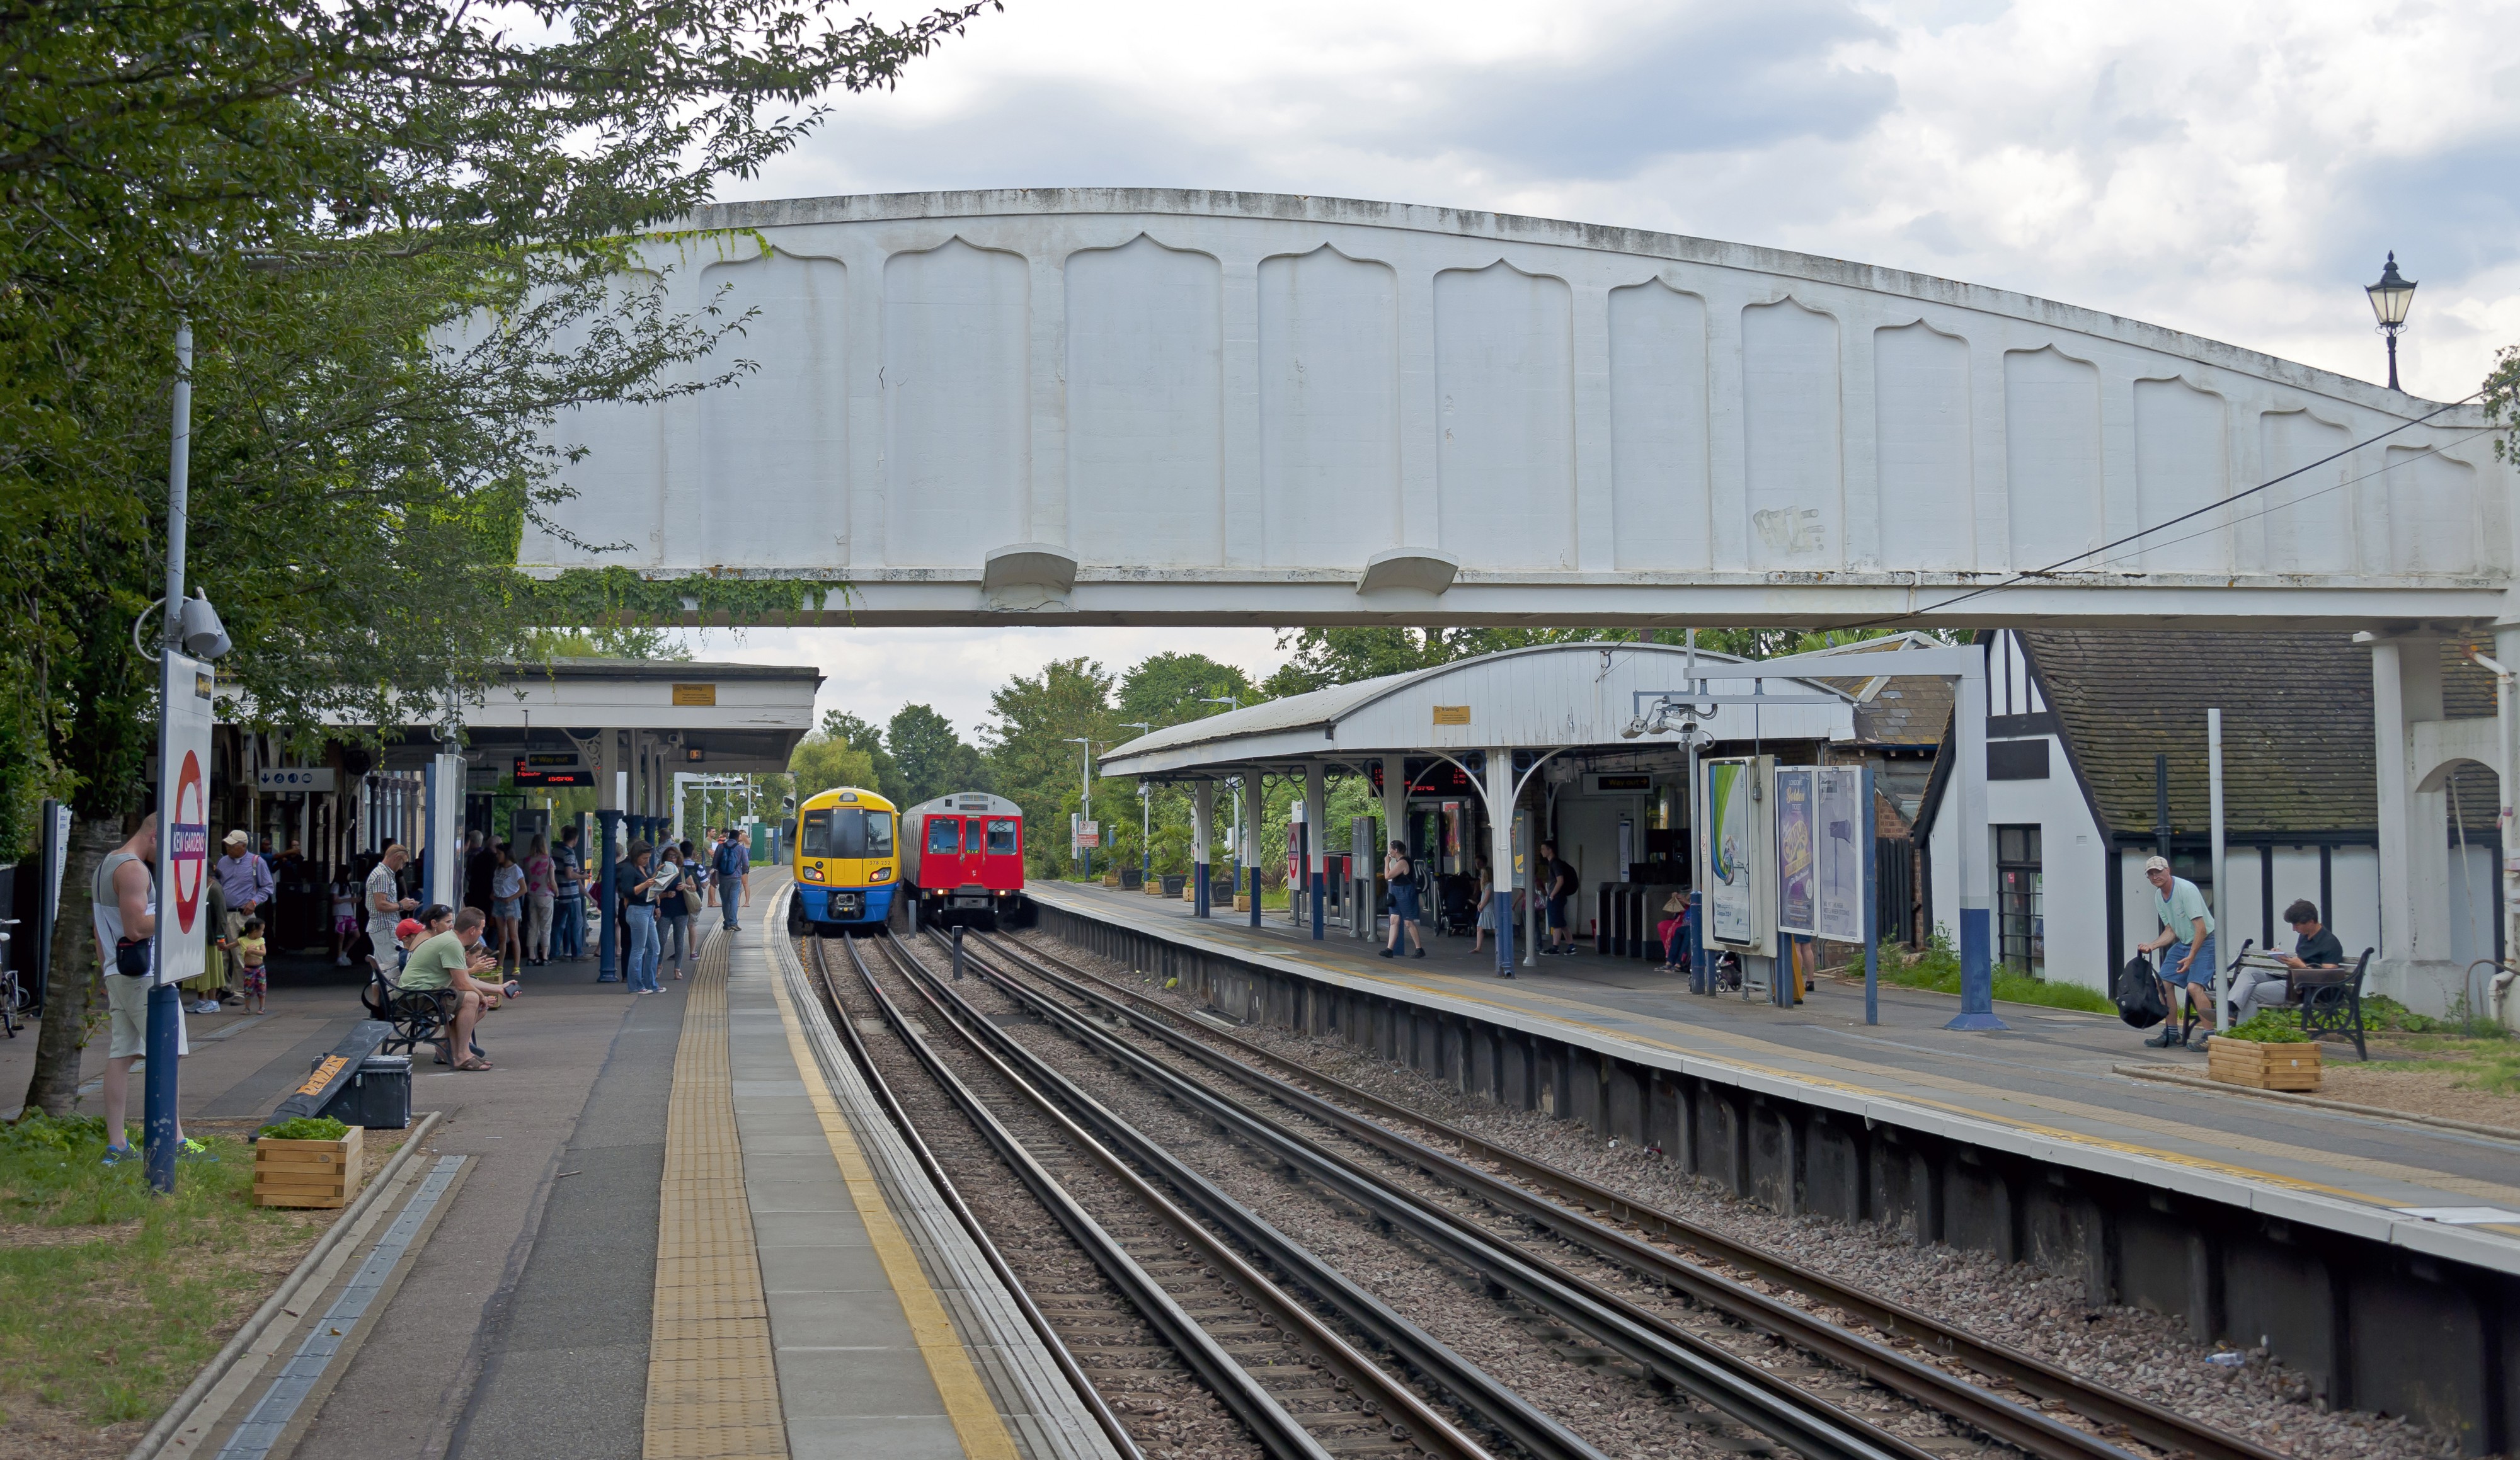 London Overground and Underground trains at Kew Gardens, with footbridge